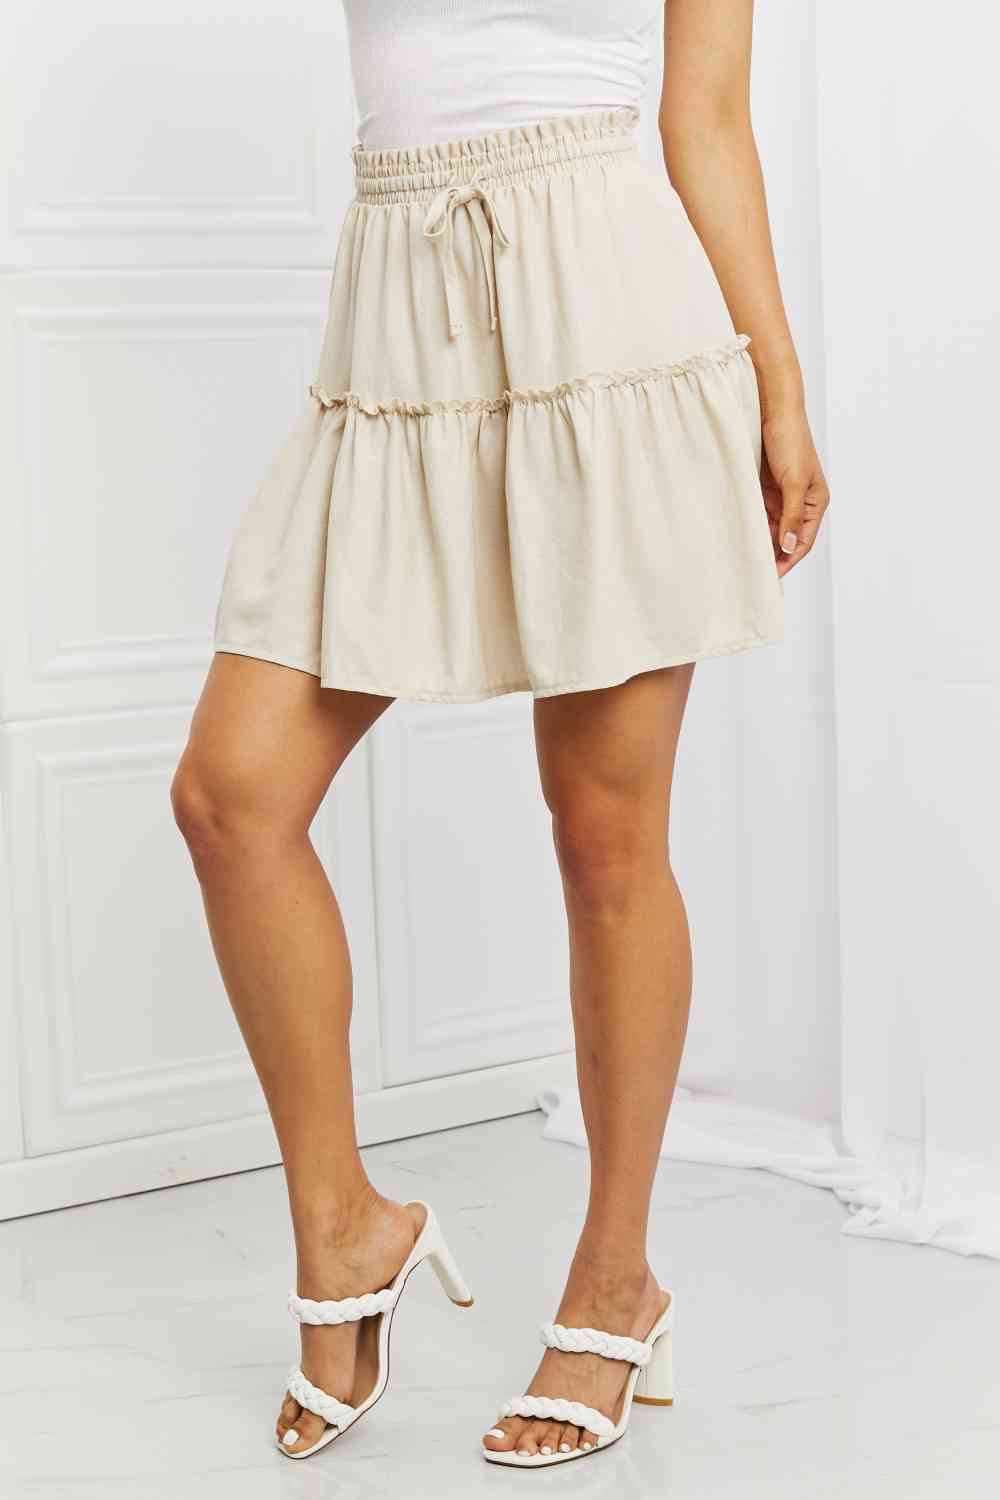 The802Gypsy Bottoms/skirts Beige / S ❤GYPSY-Zenana-Carefree Linen Ruffle Skirt